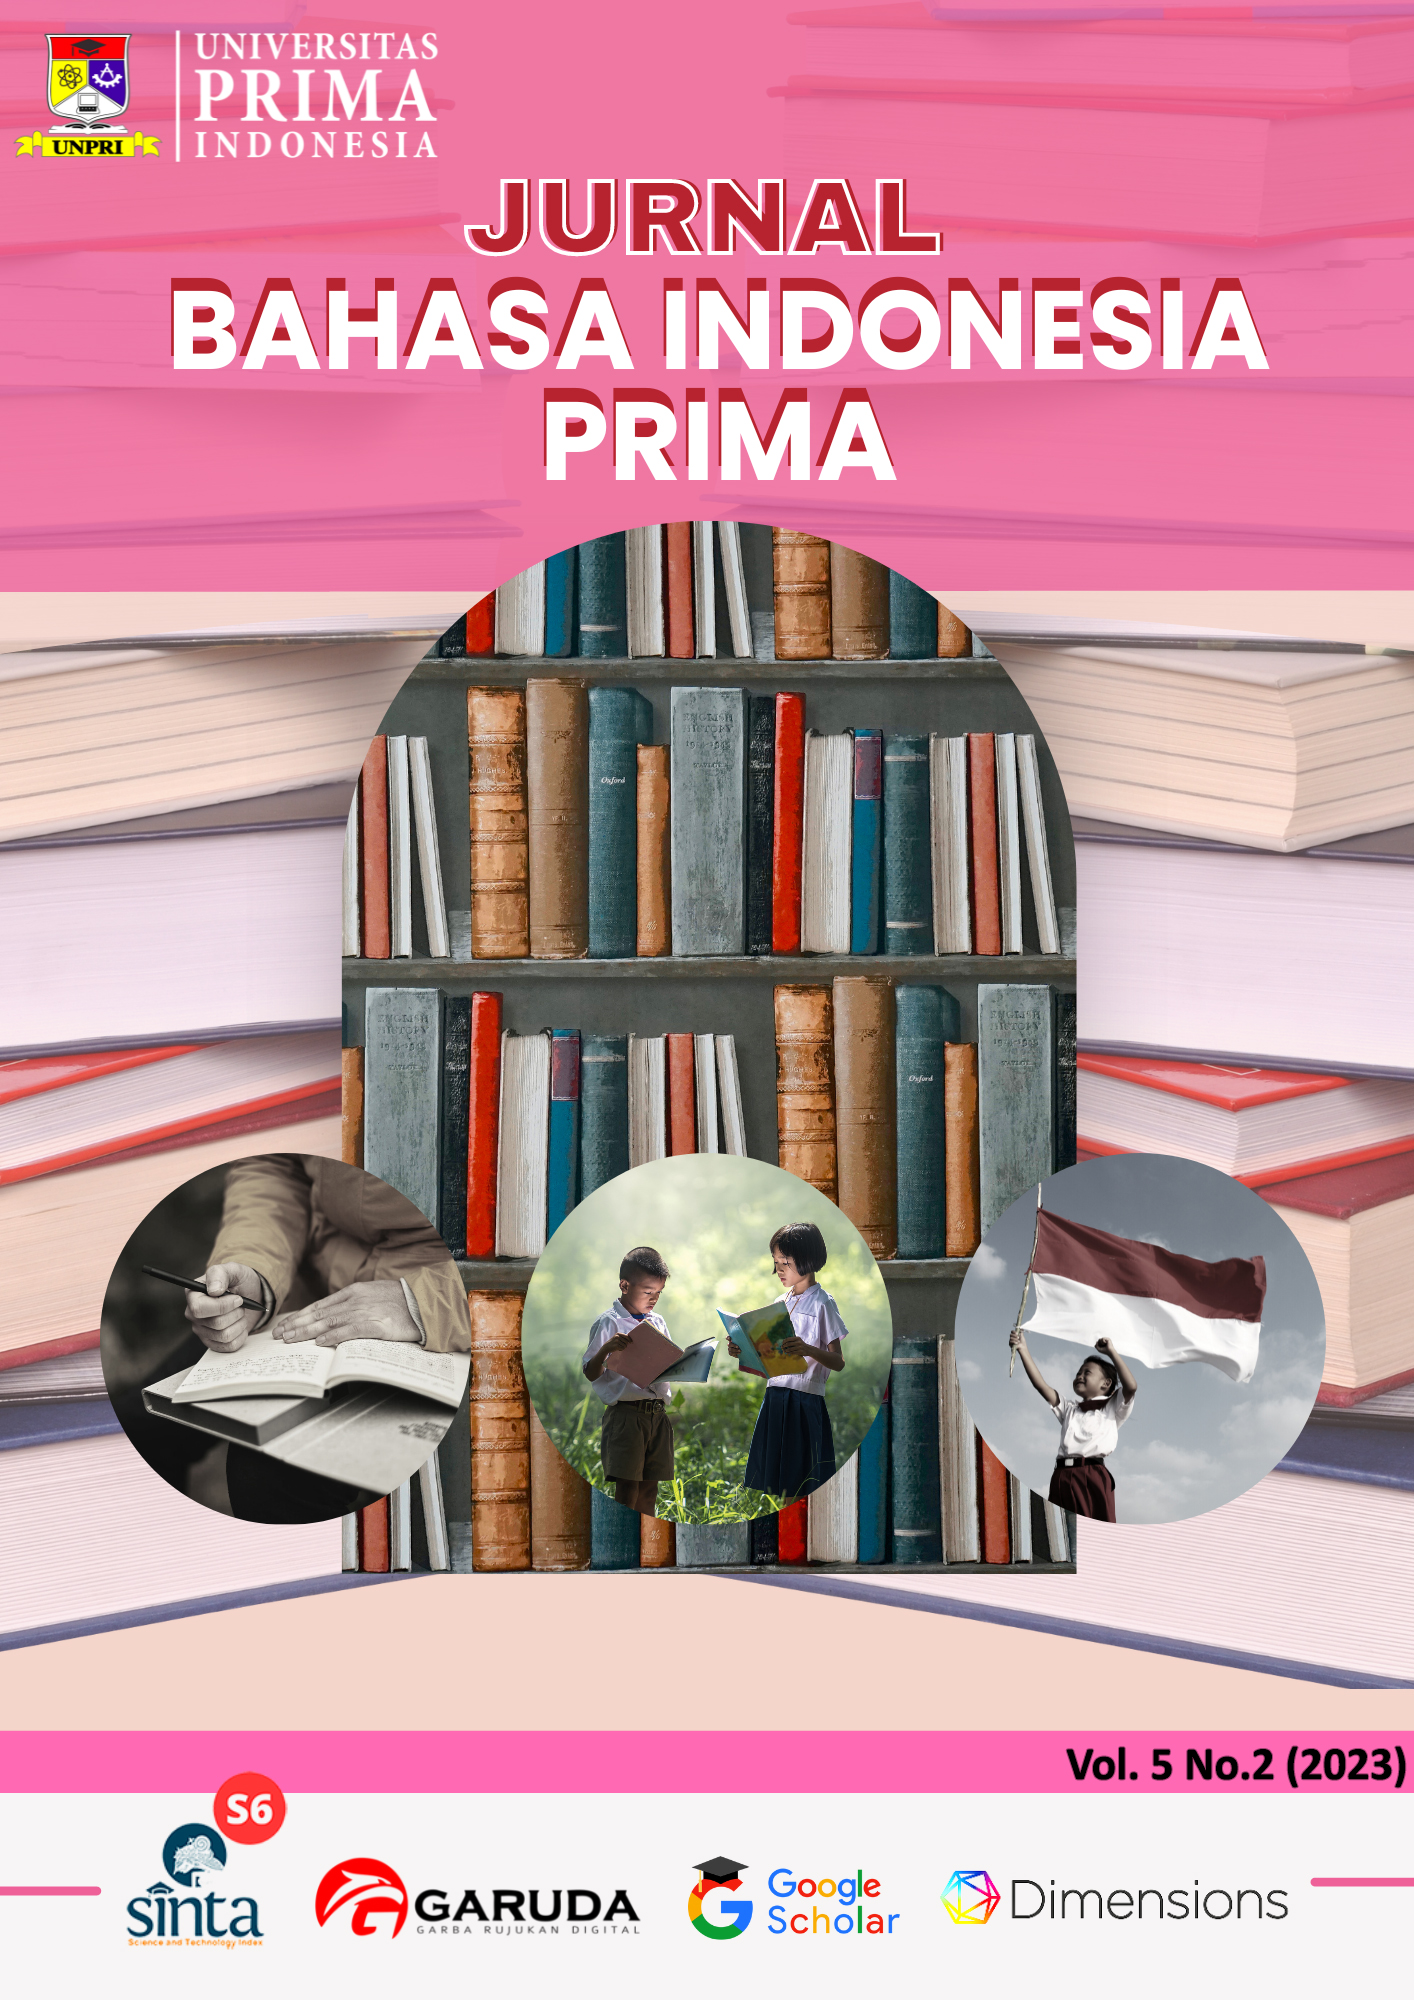 					View Vol. 5 No. 2 (2023): Bahasa Indonesia Prima (BIP)
				